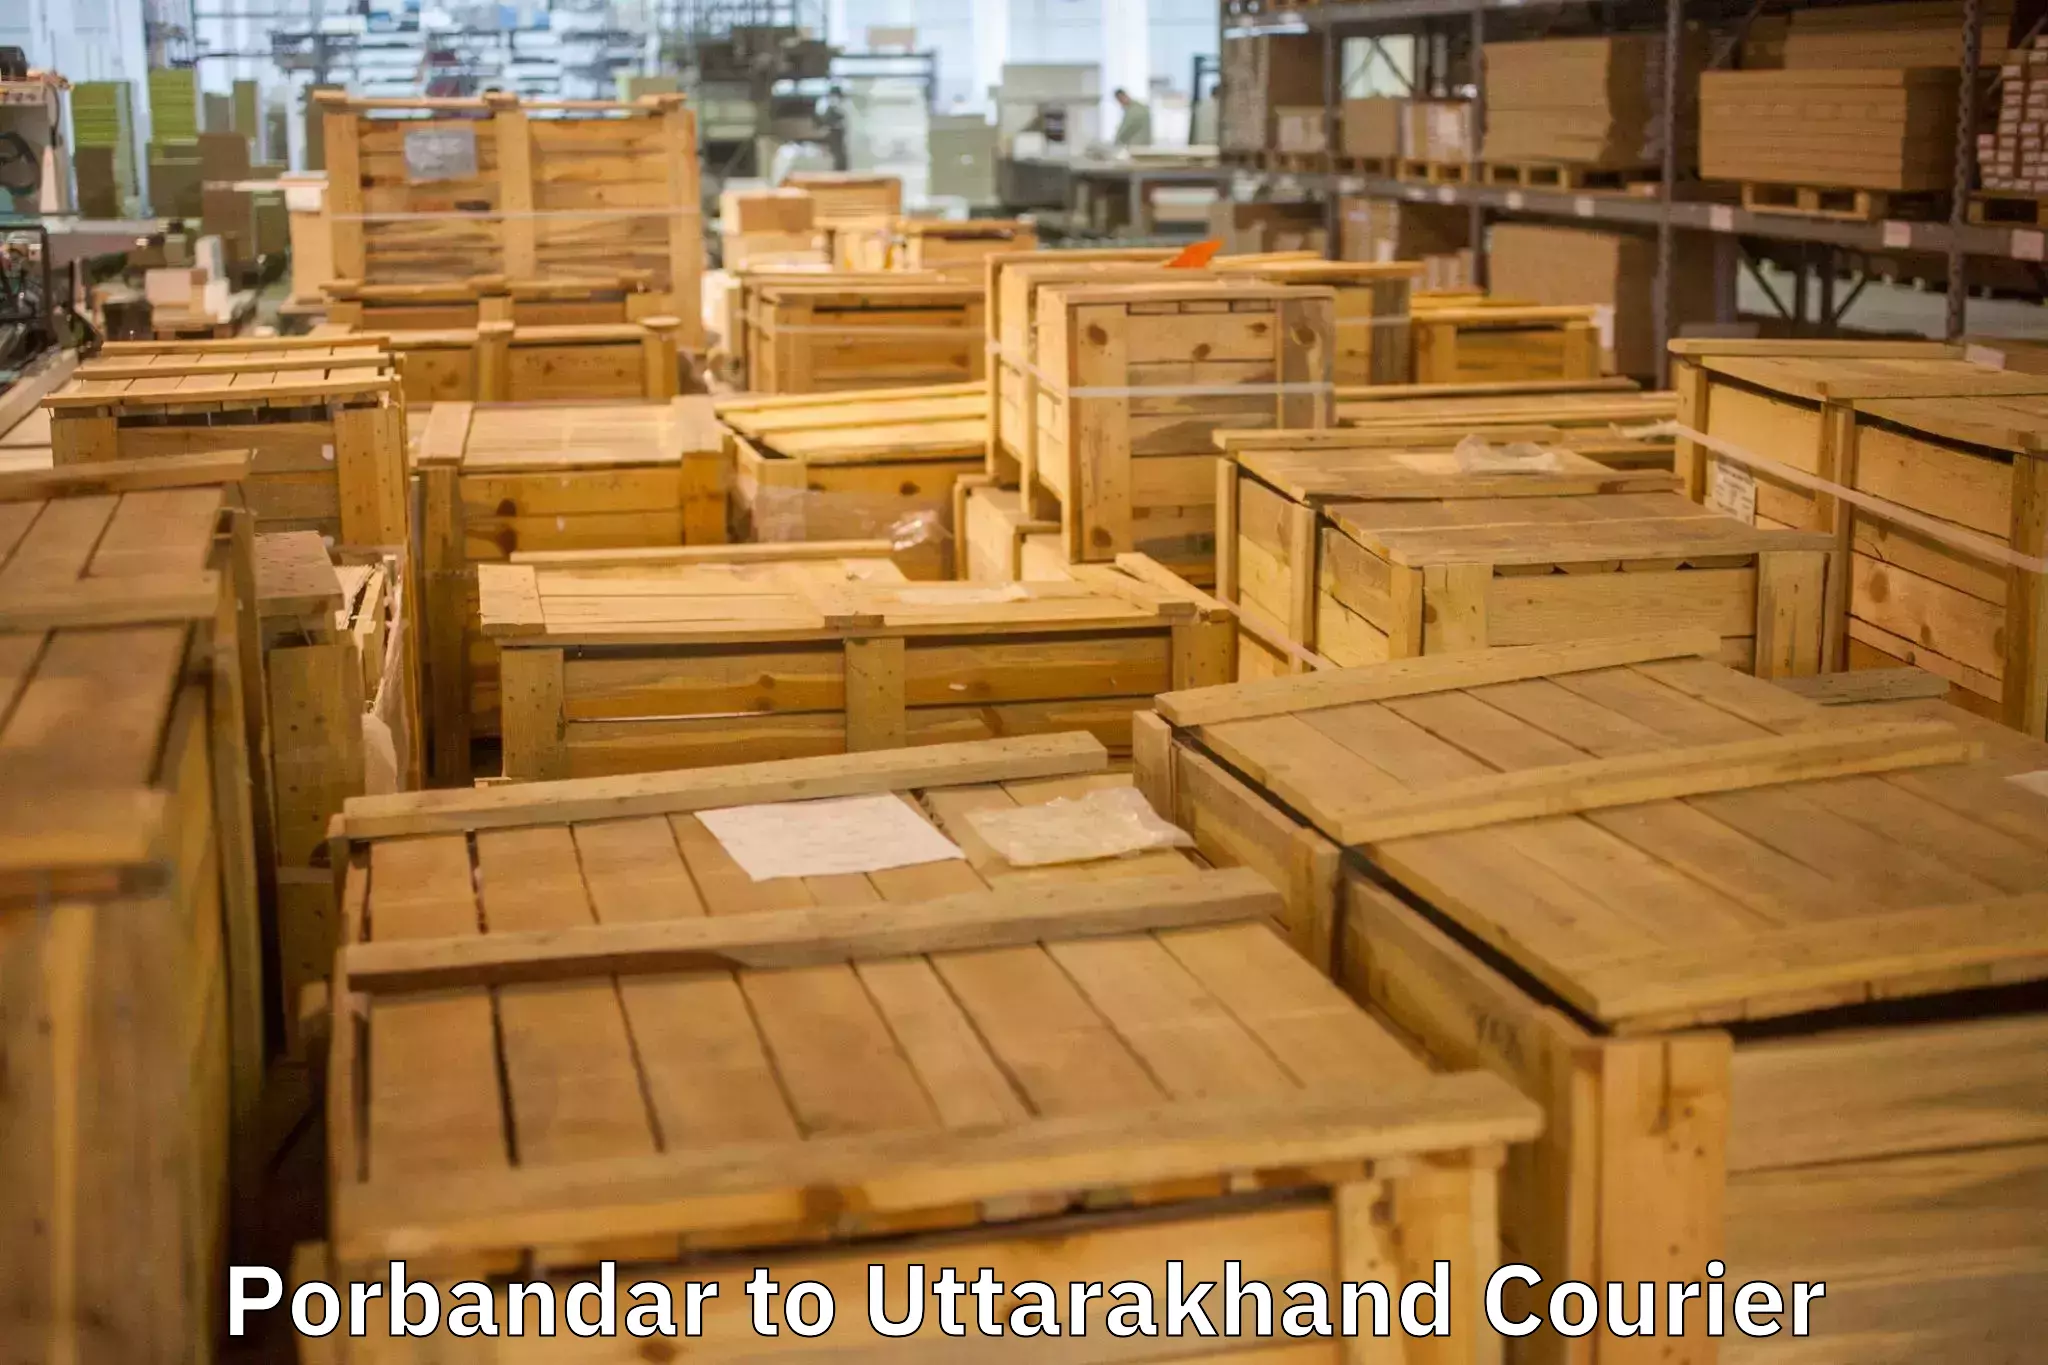 Cost-effective moving options Porbandar to Chamoli